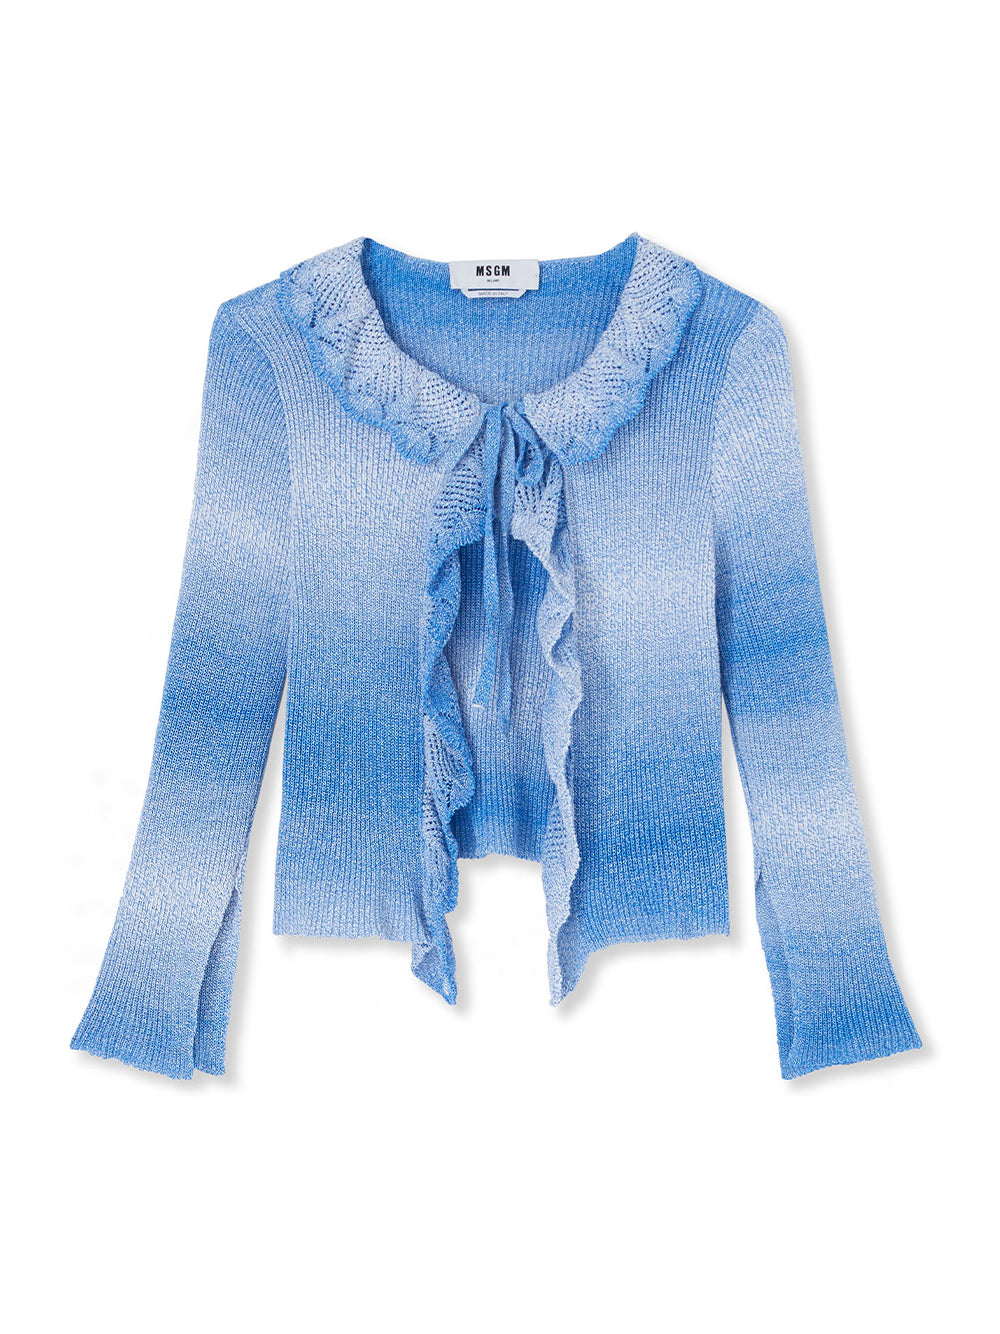 Maglia/sweater Light Blue